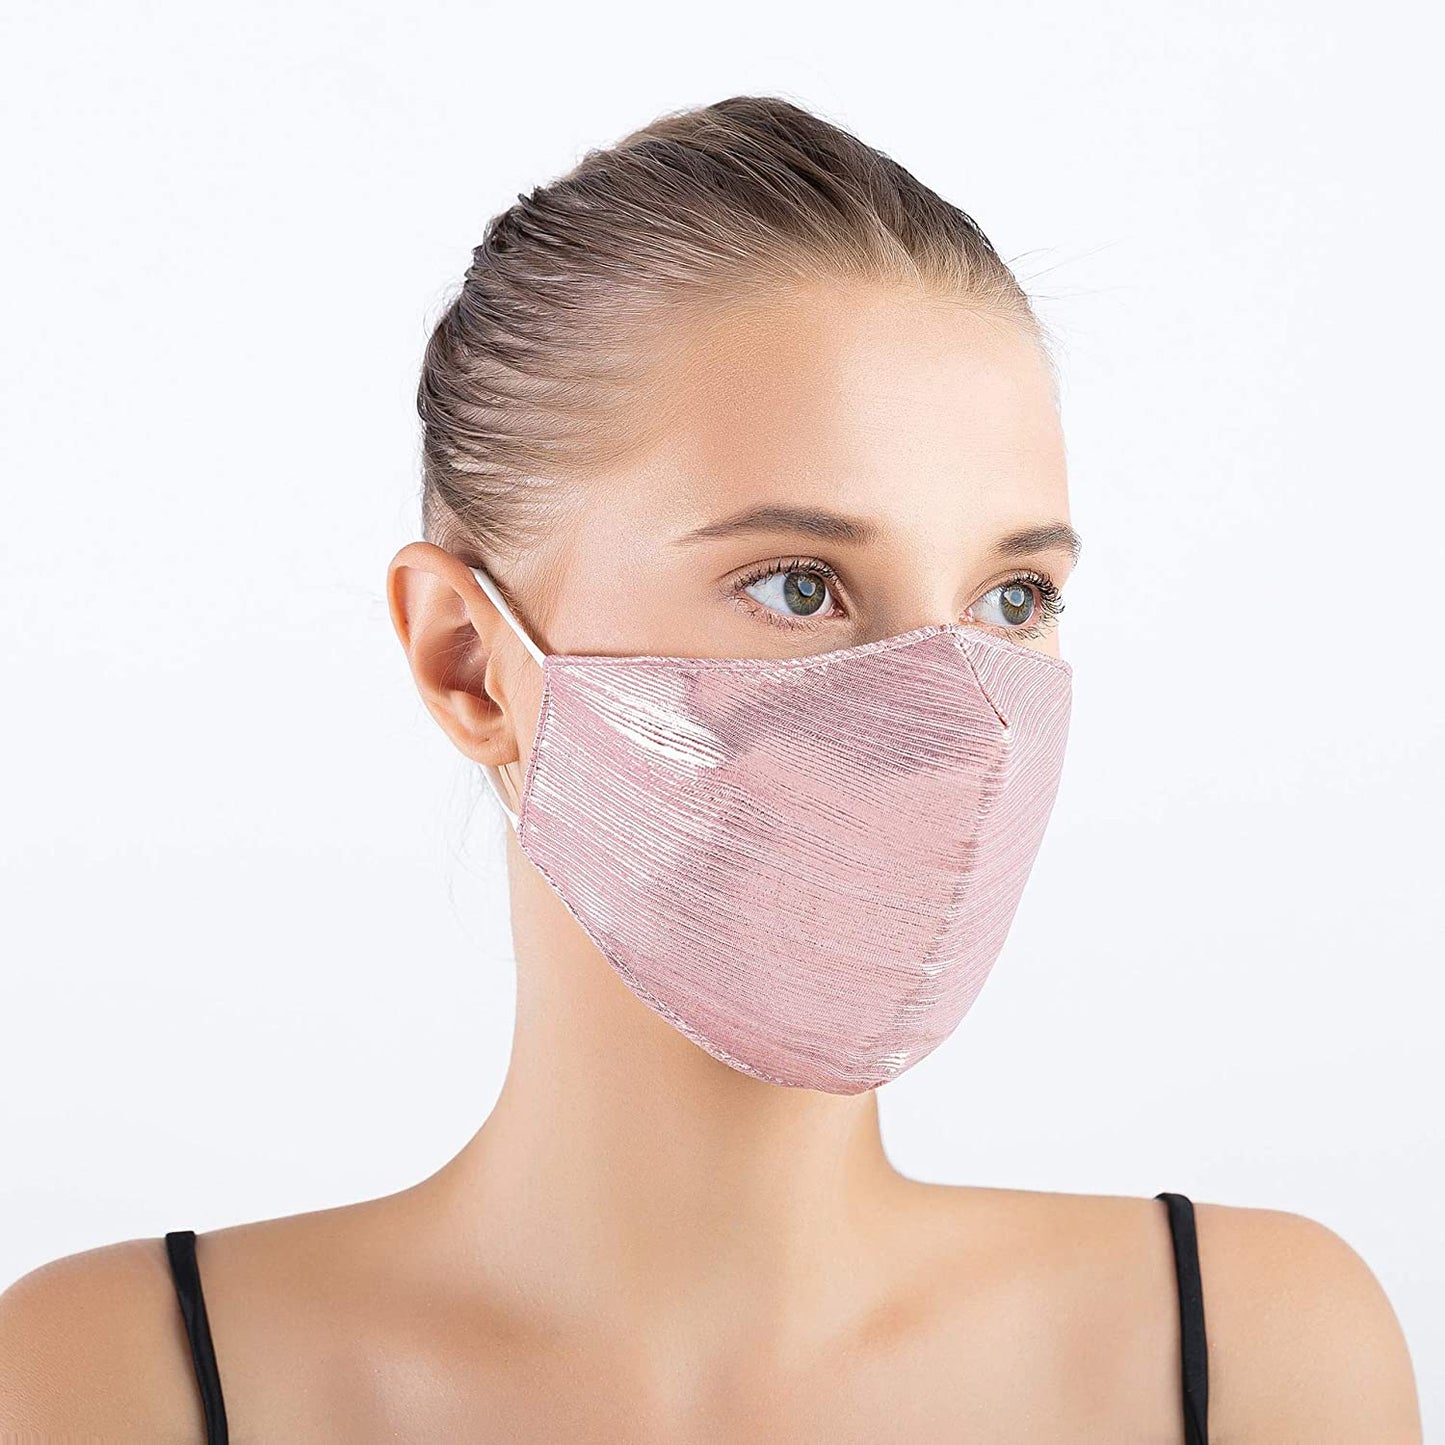 (2 Masks+20 PM2.5 Filters) 2PCS Shiny Brushed Finish Protective Fashion Face M